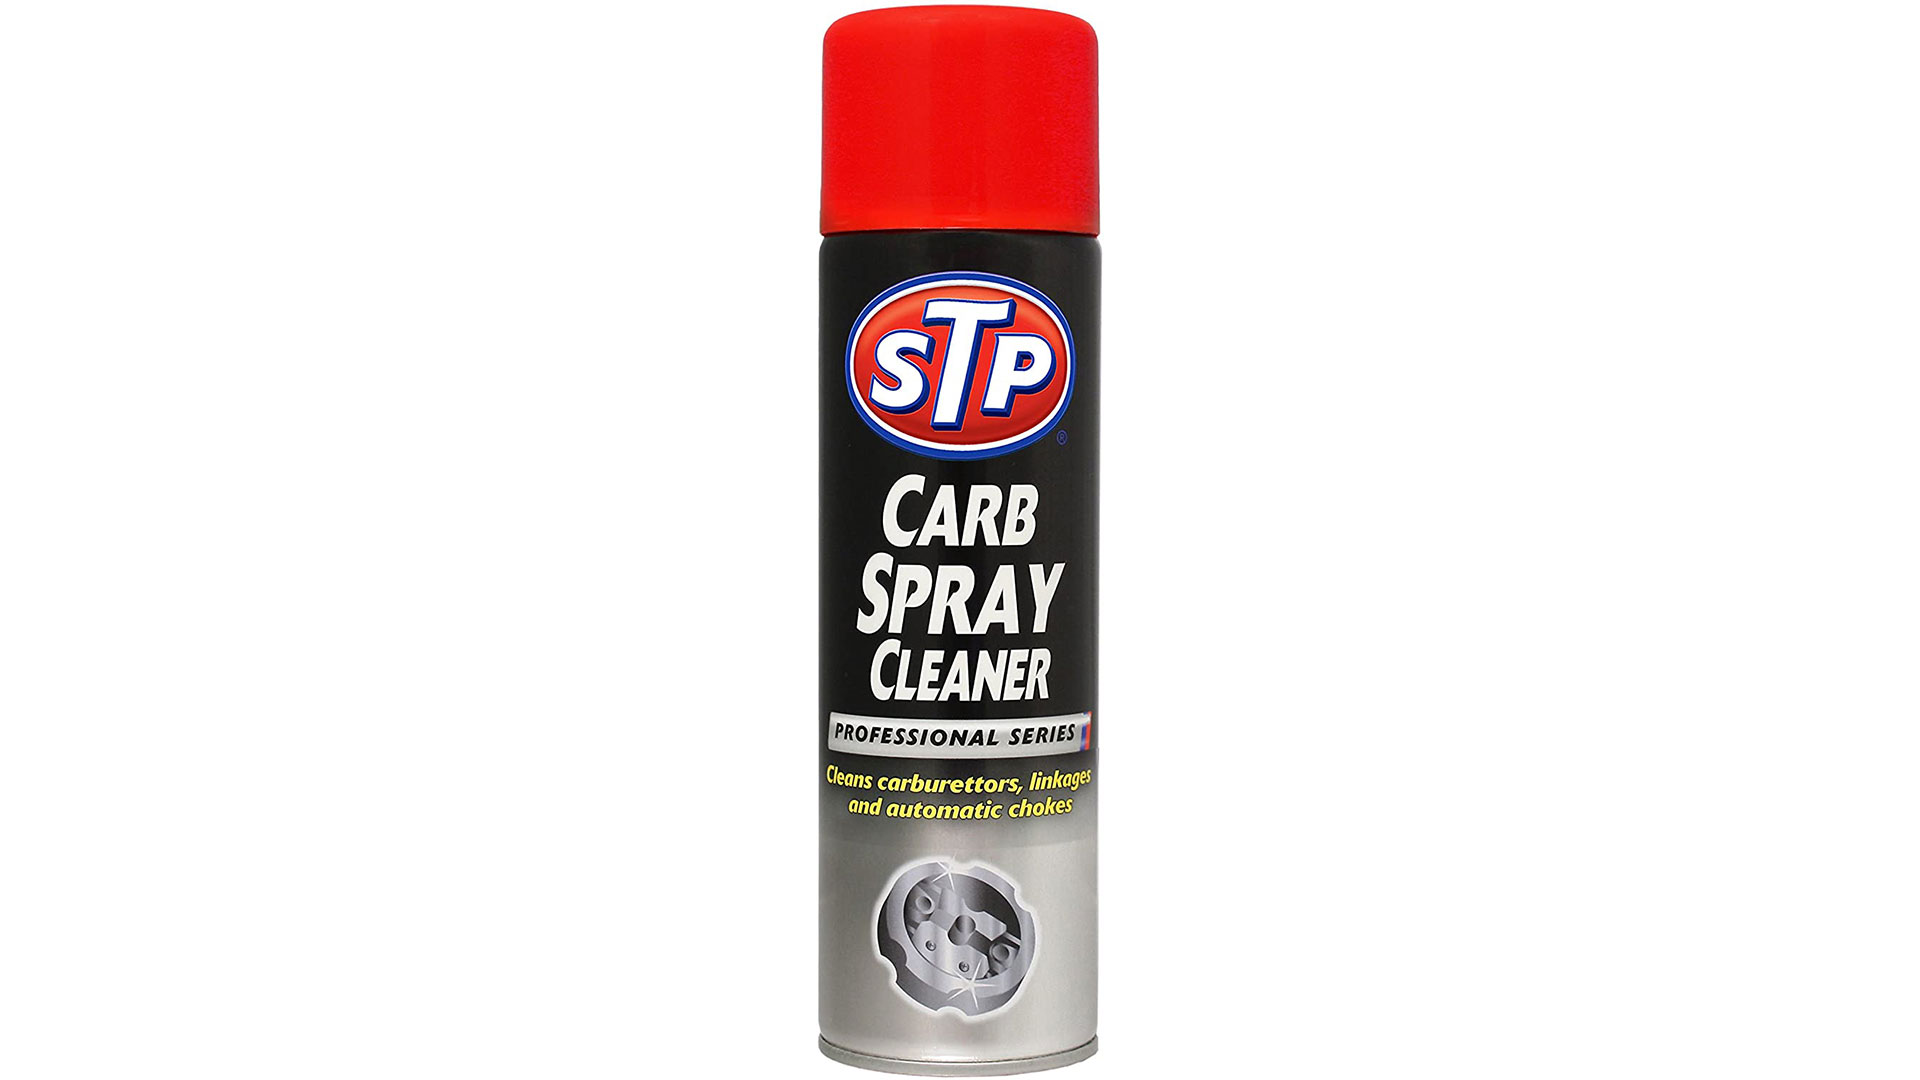 stp carb spray cleaner